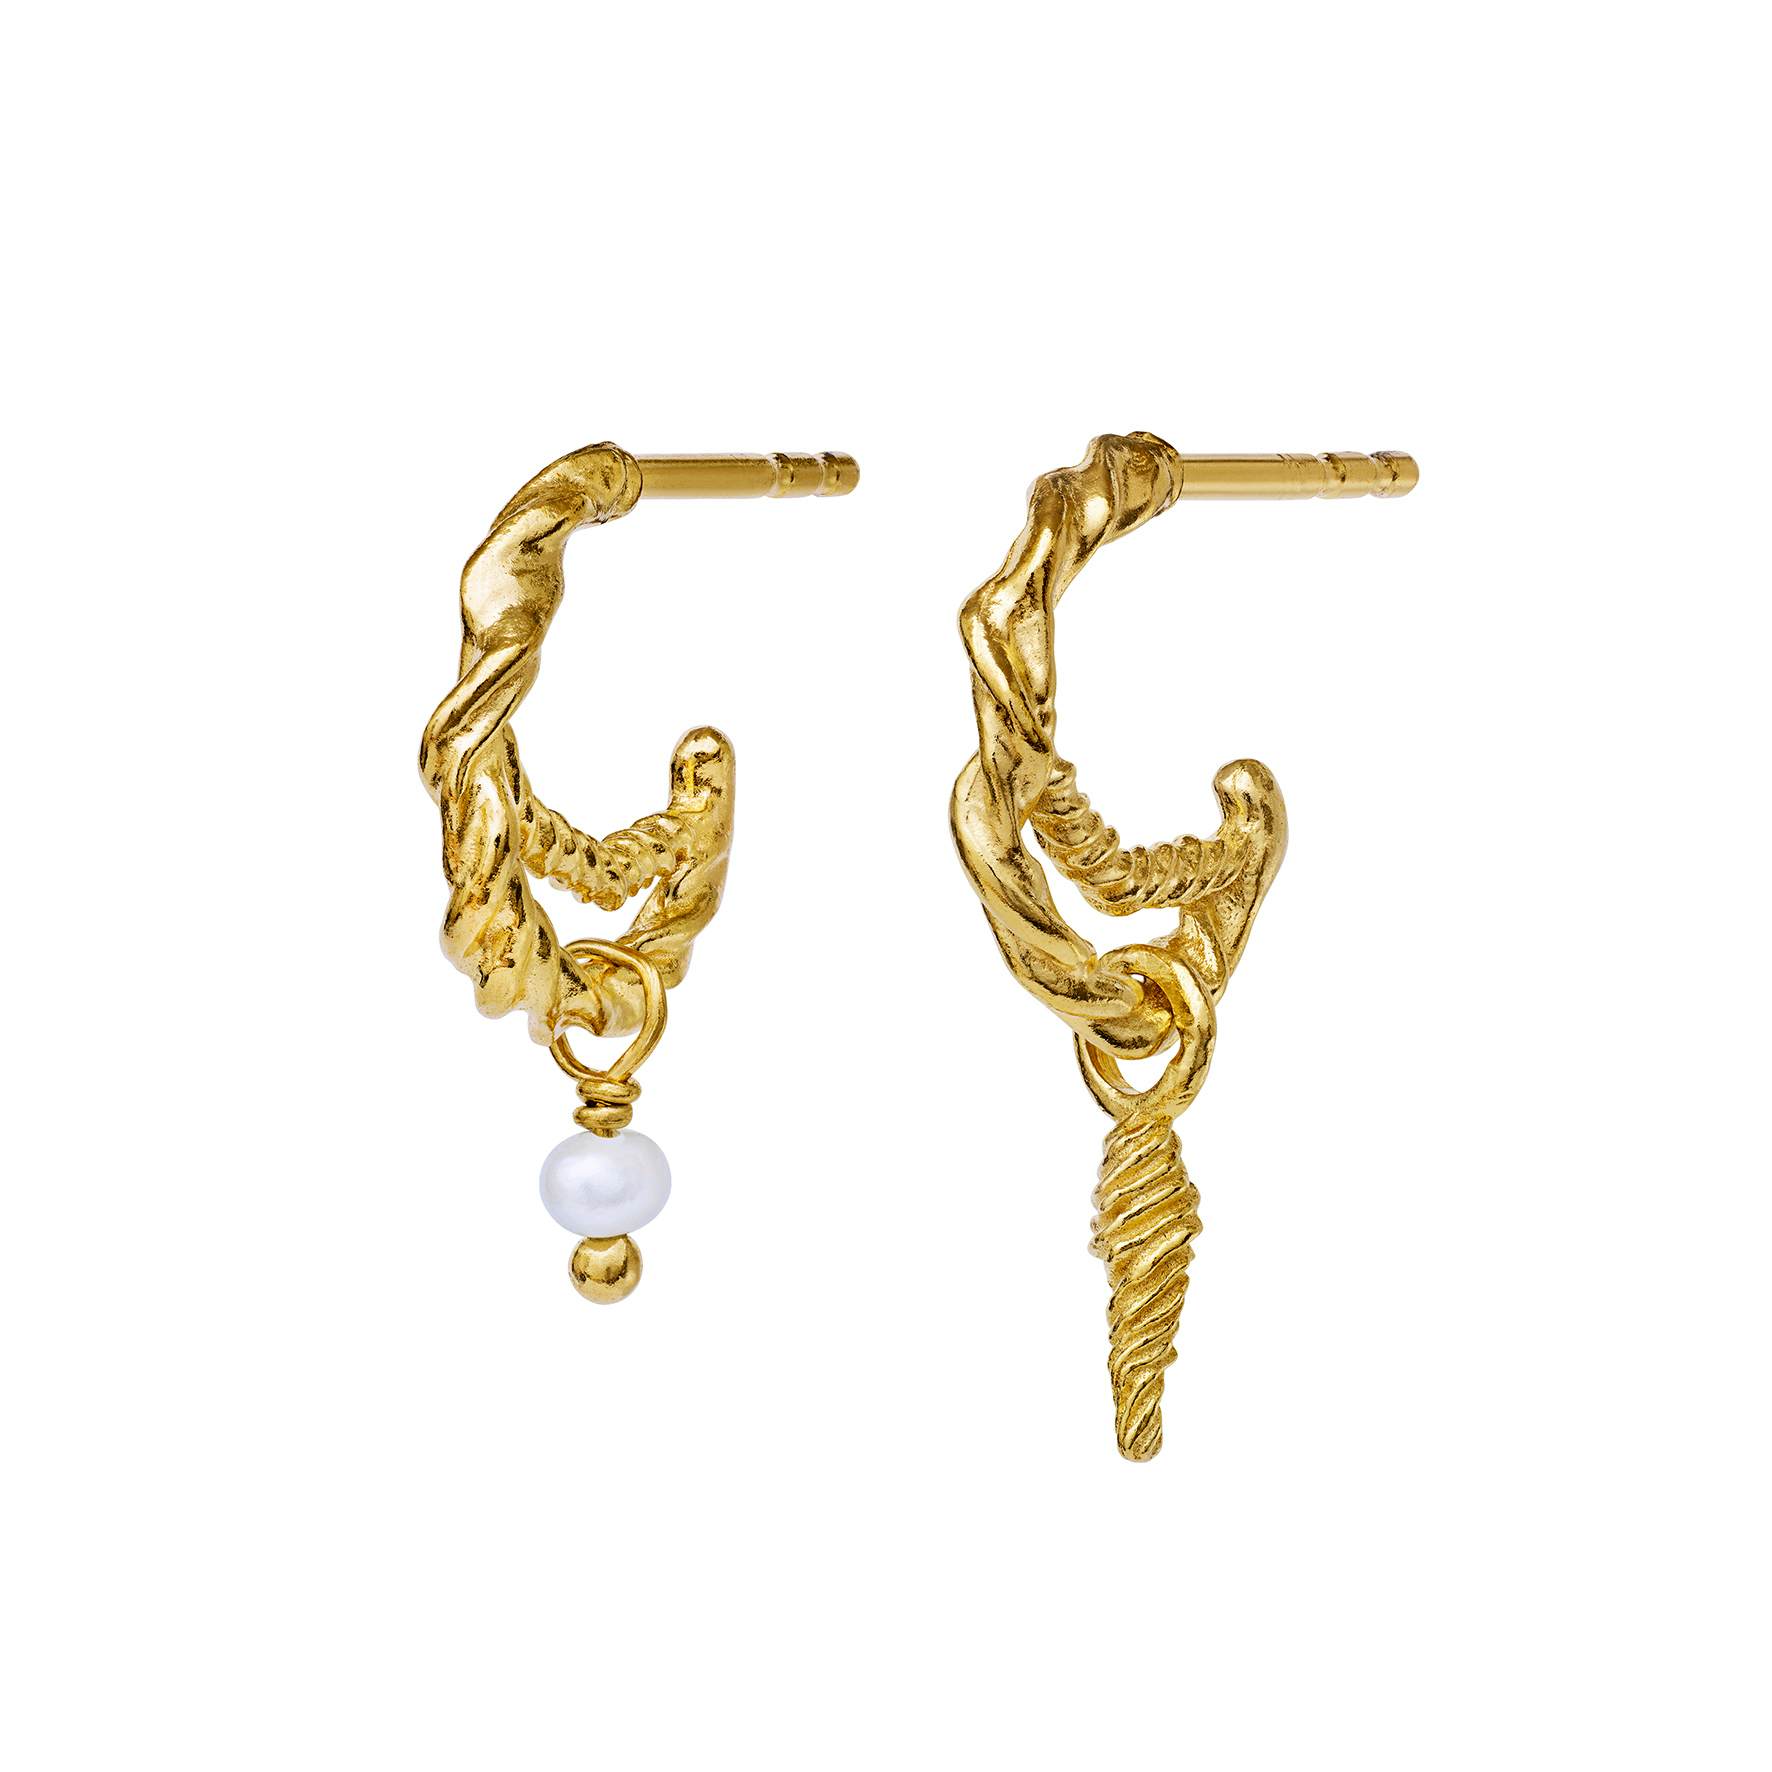 Duo Earrings from Maanesten in Goldplated-Silver Sterling 925|Freshwater Pearl